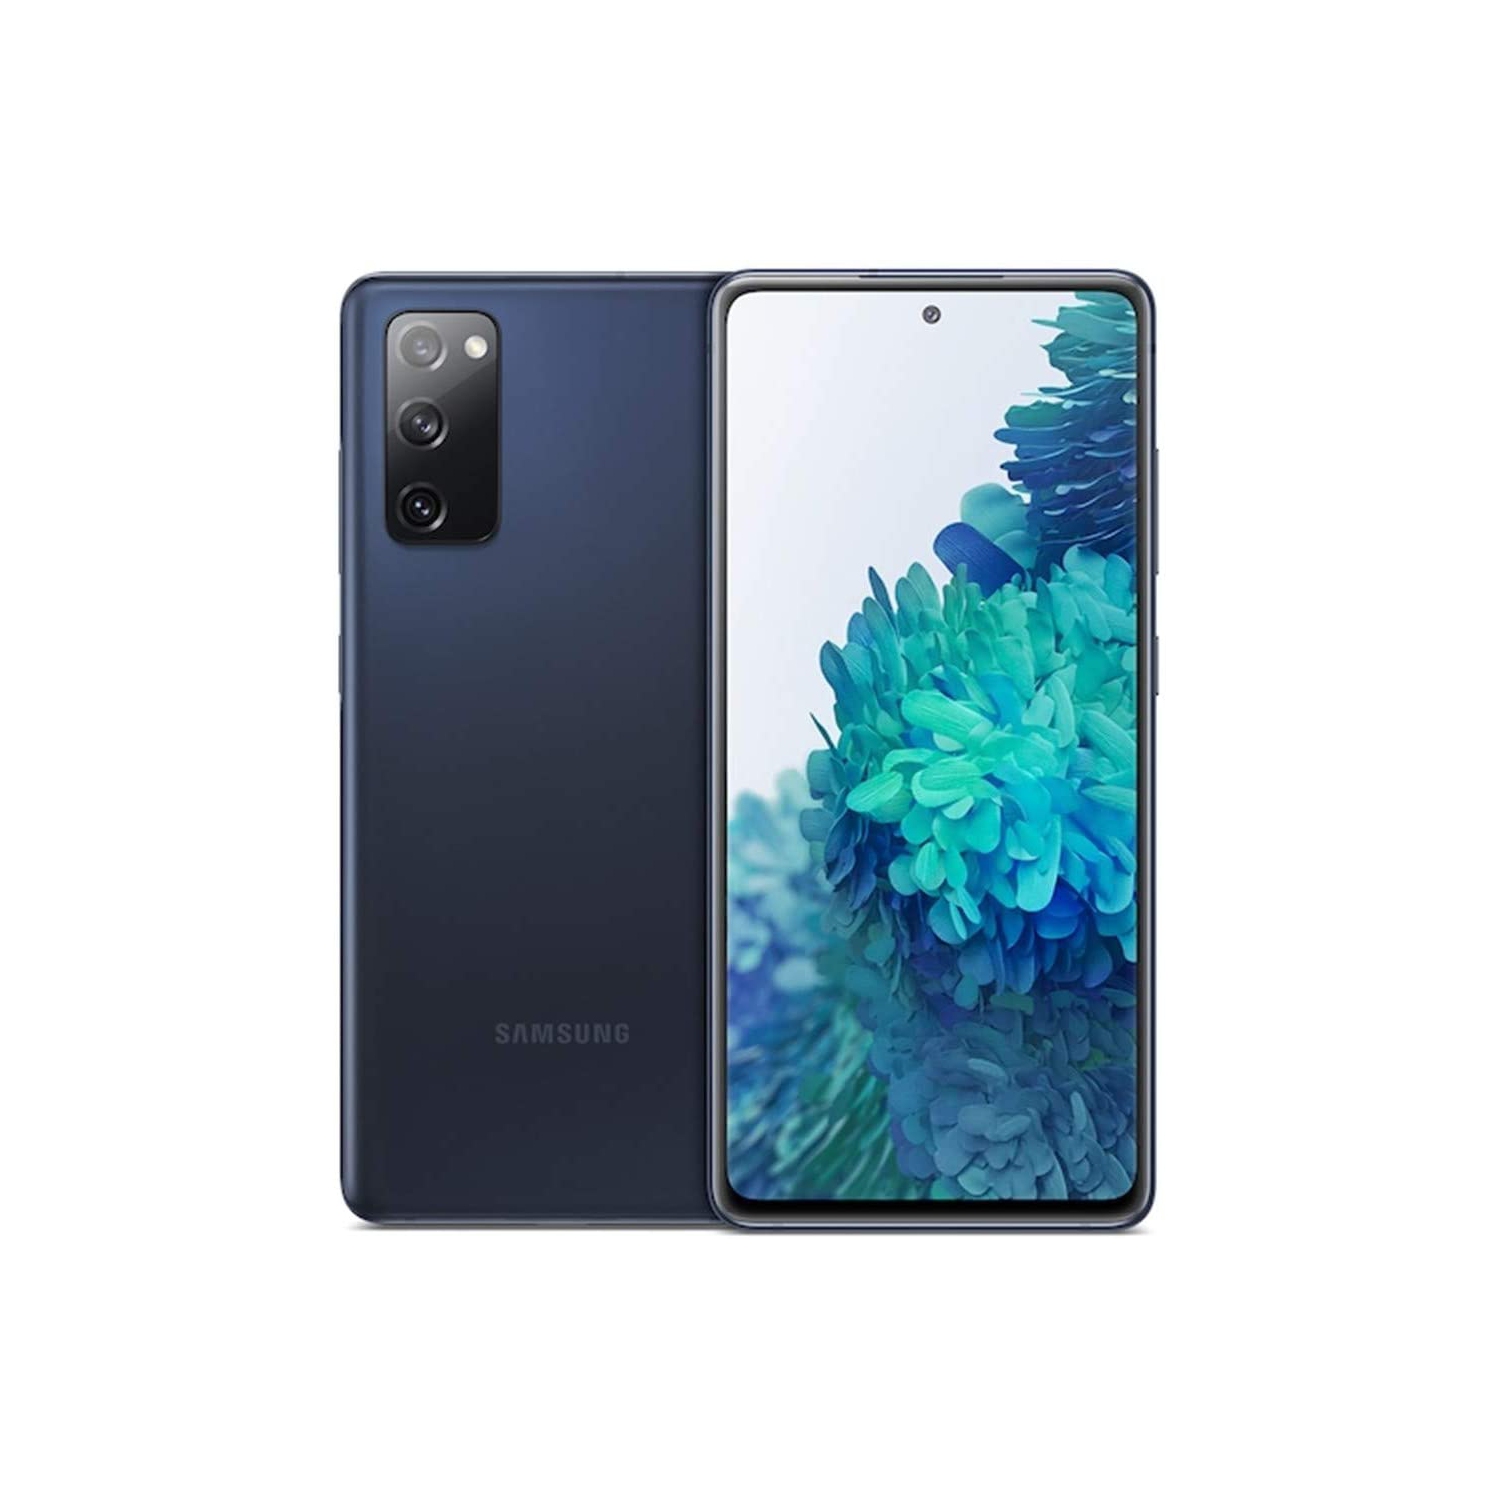 SAMSUNG Galaxy S20 FE 5G-SM-G781V Cell Phone 128GB -OPEN BOX